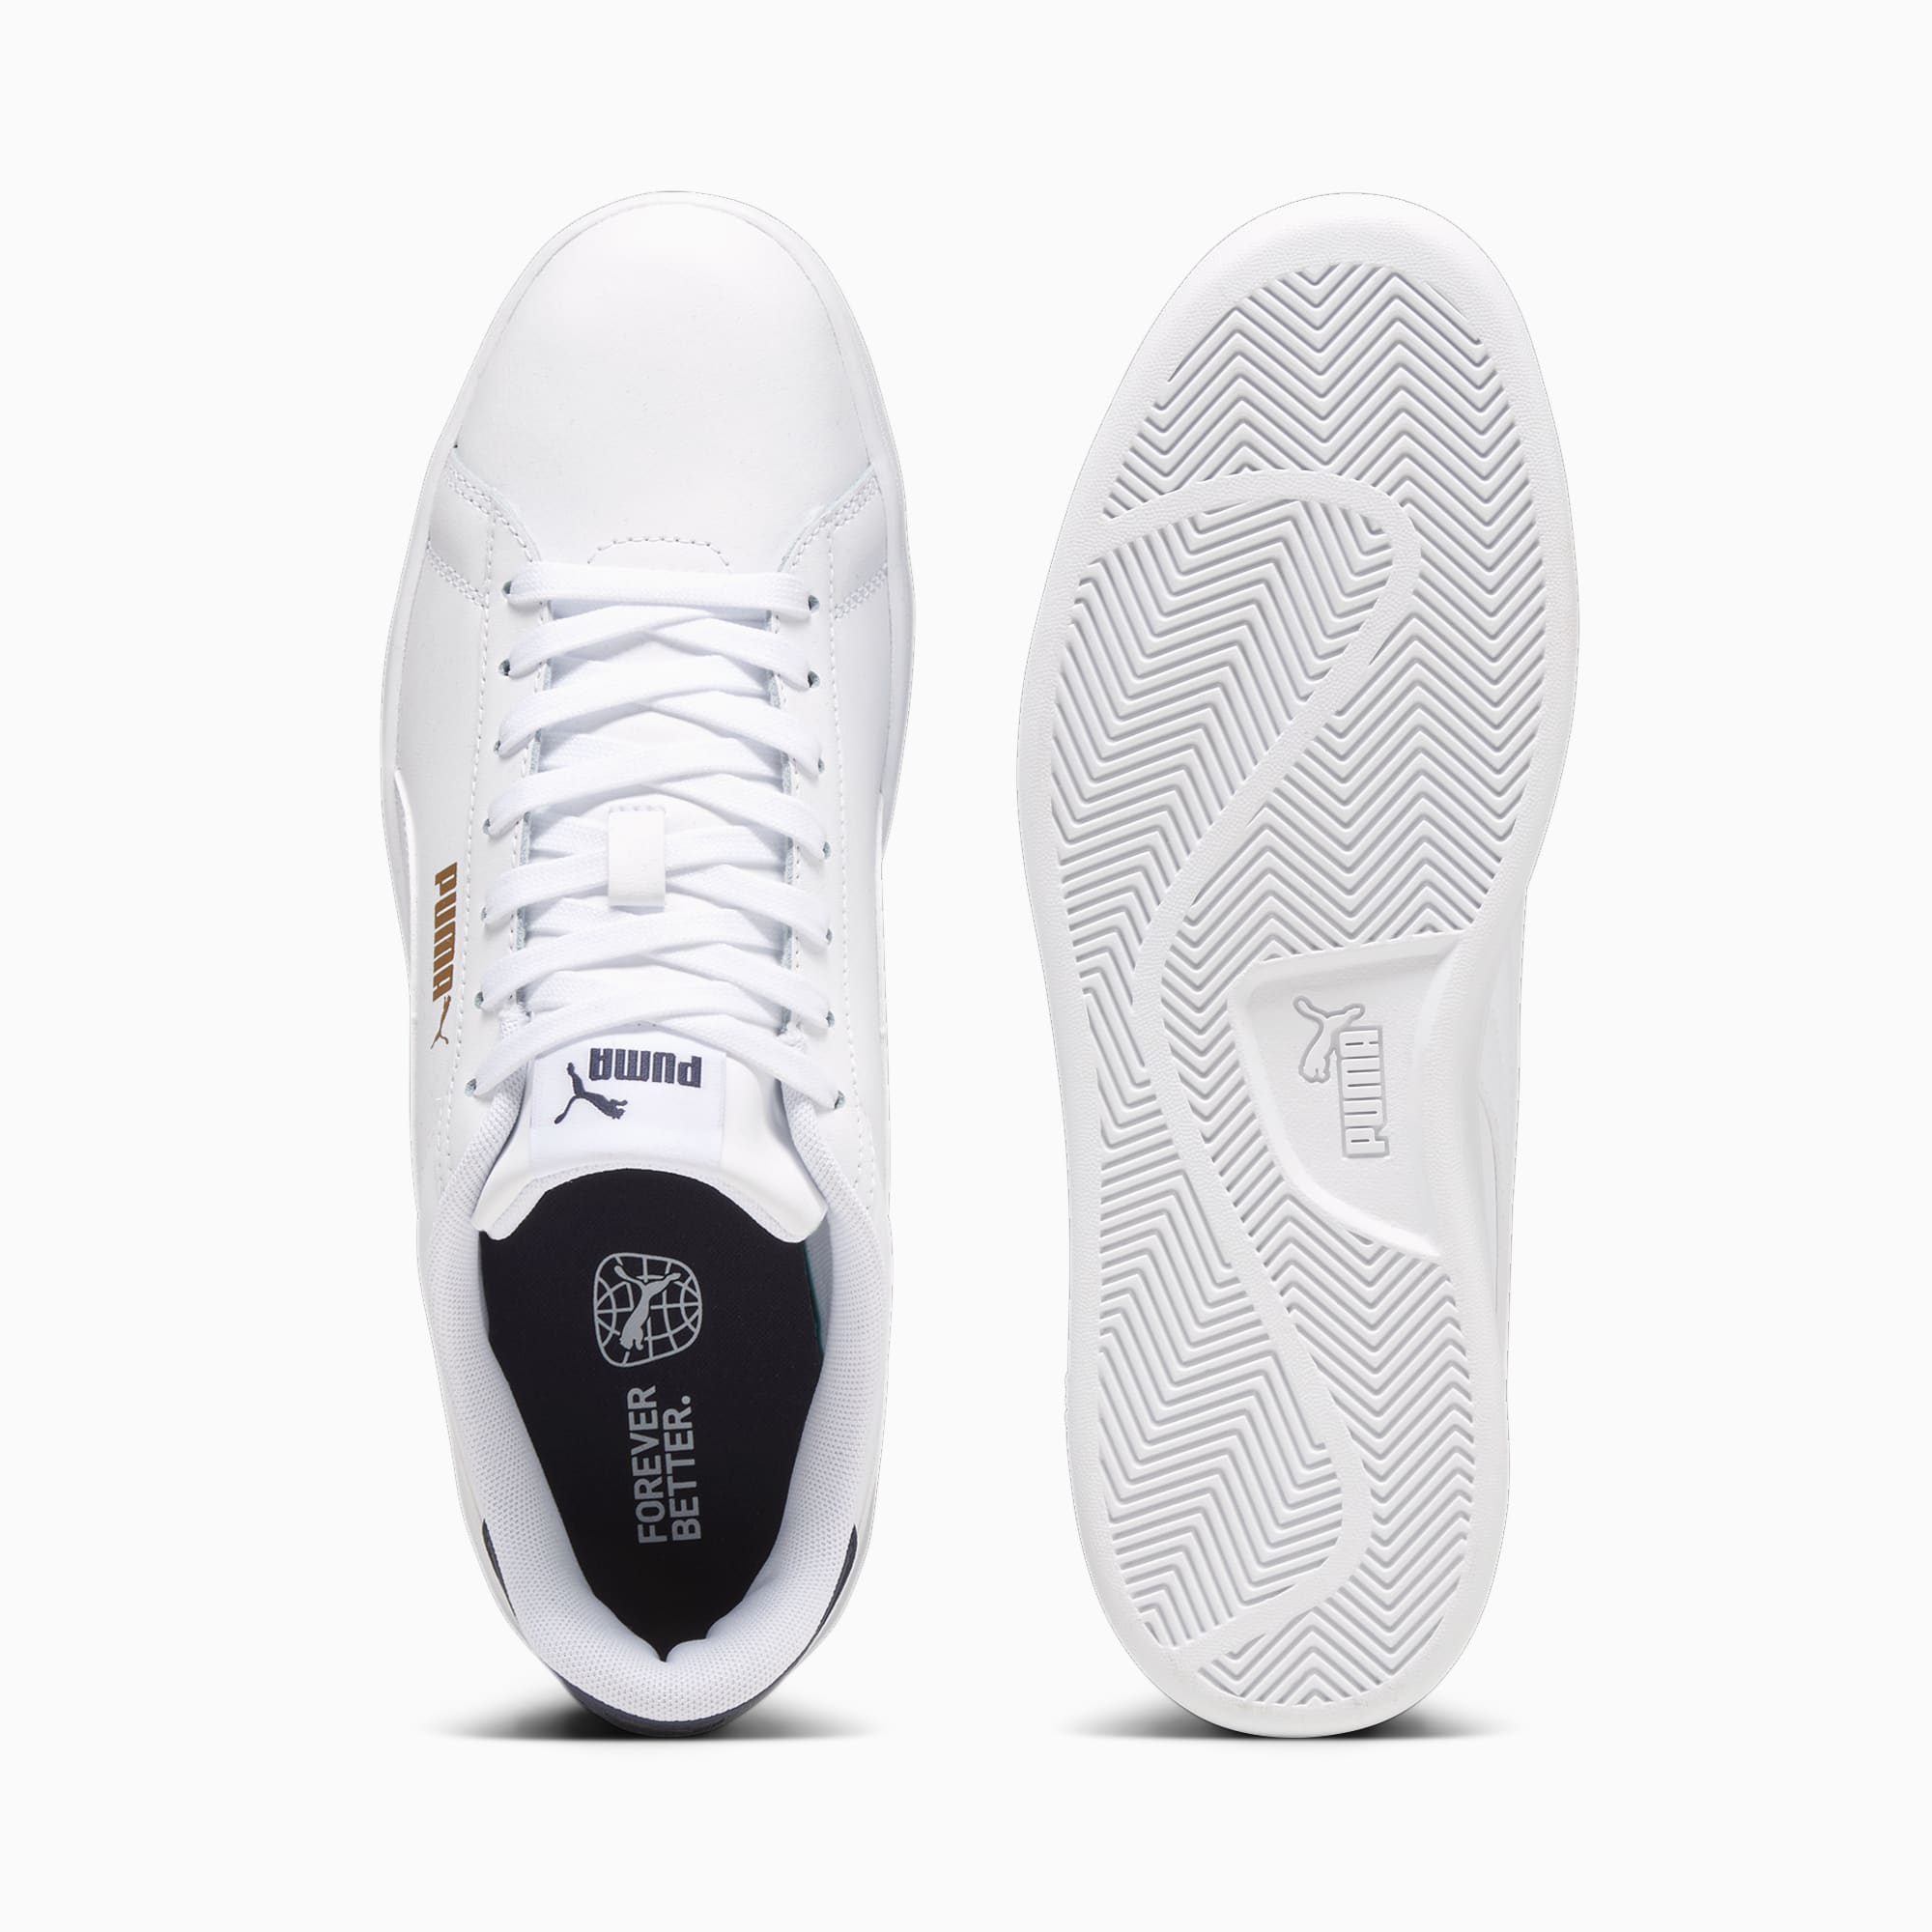 Buy Puma Unisex-Adult Smash 3.0 Black-White Sneaker - 11UK (39523101) at